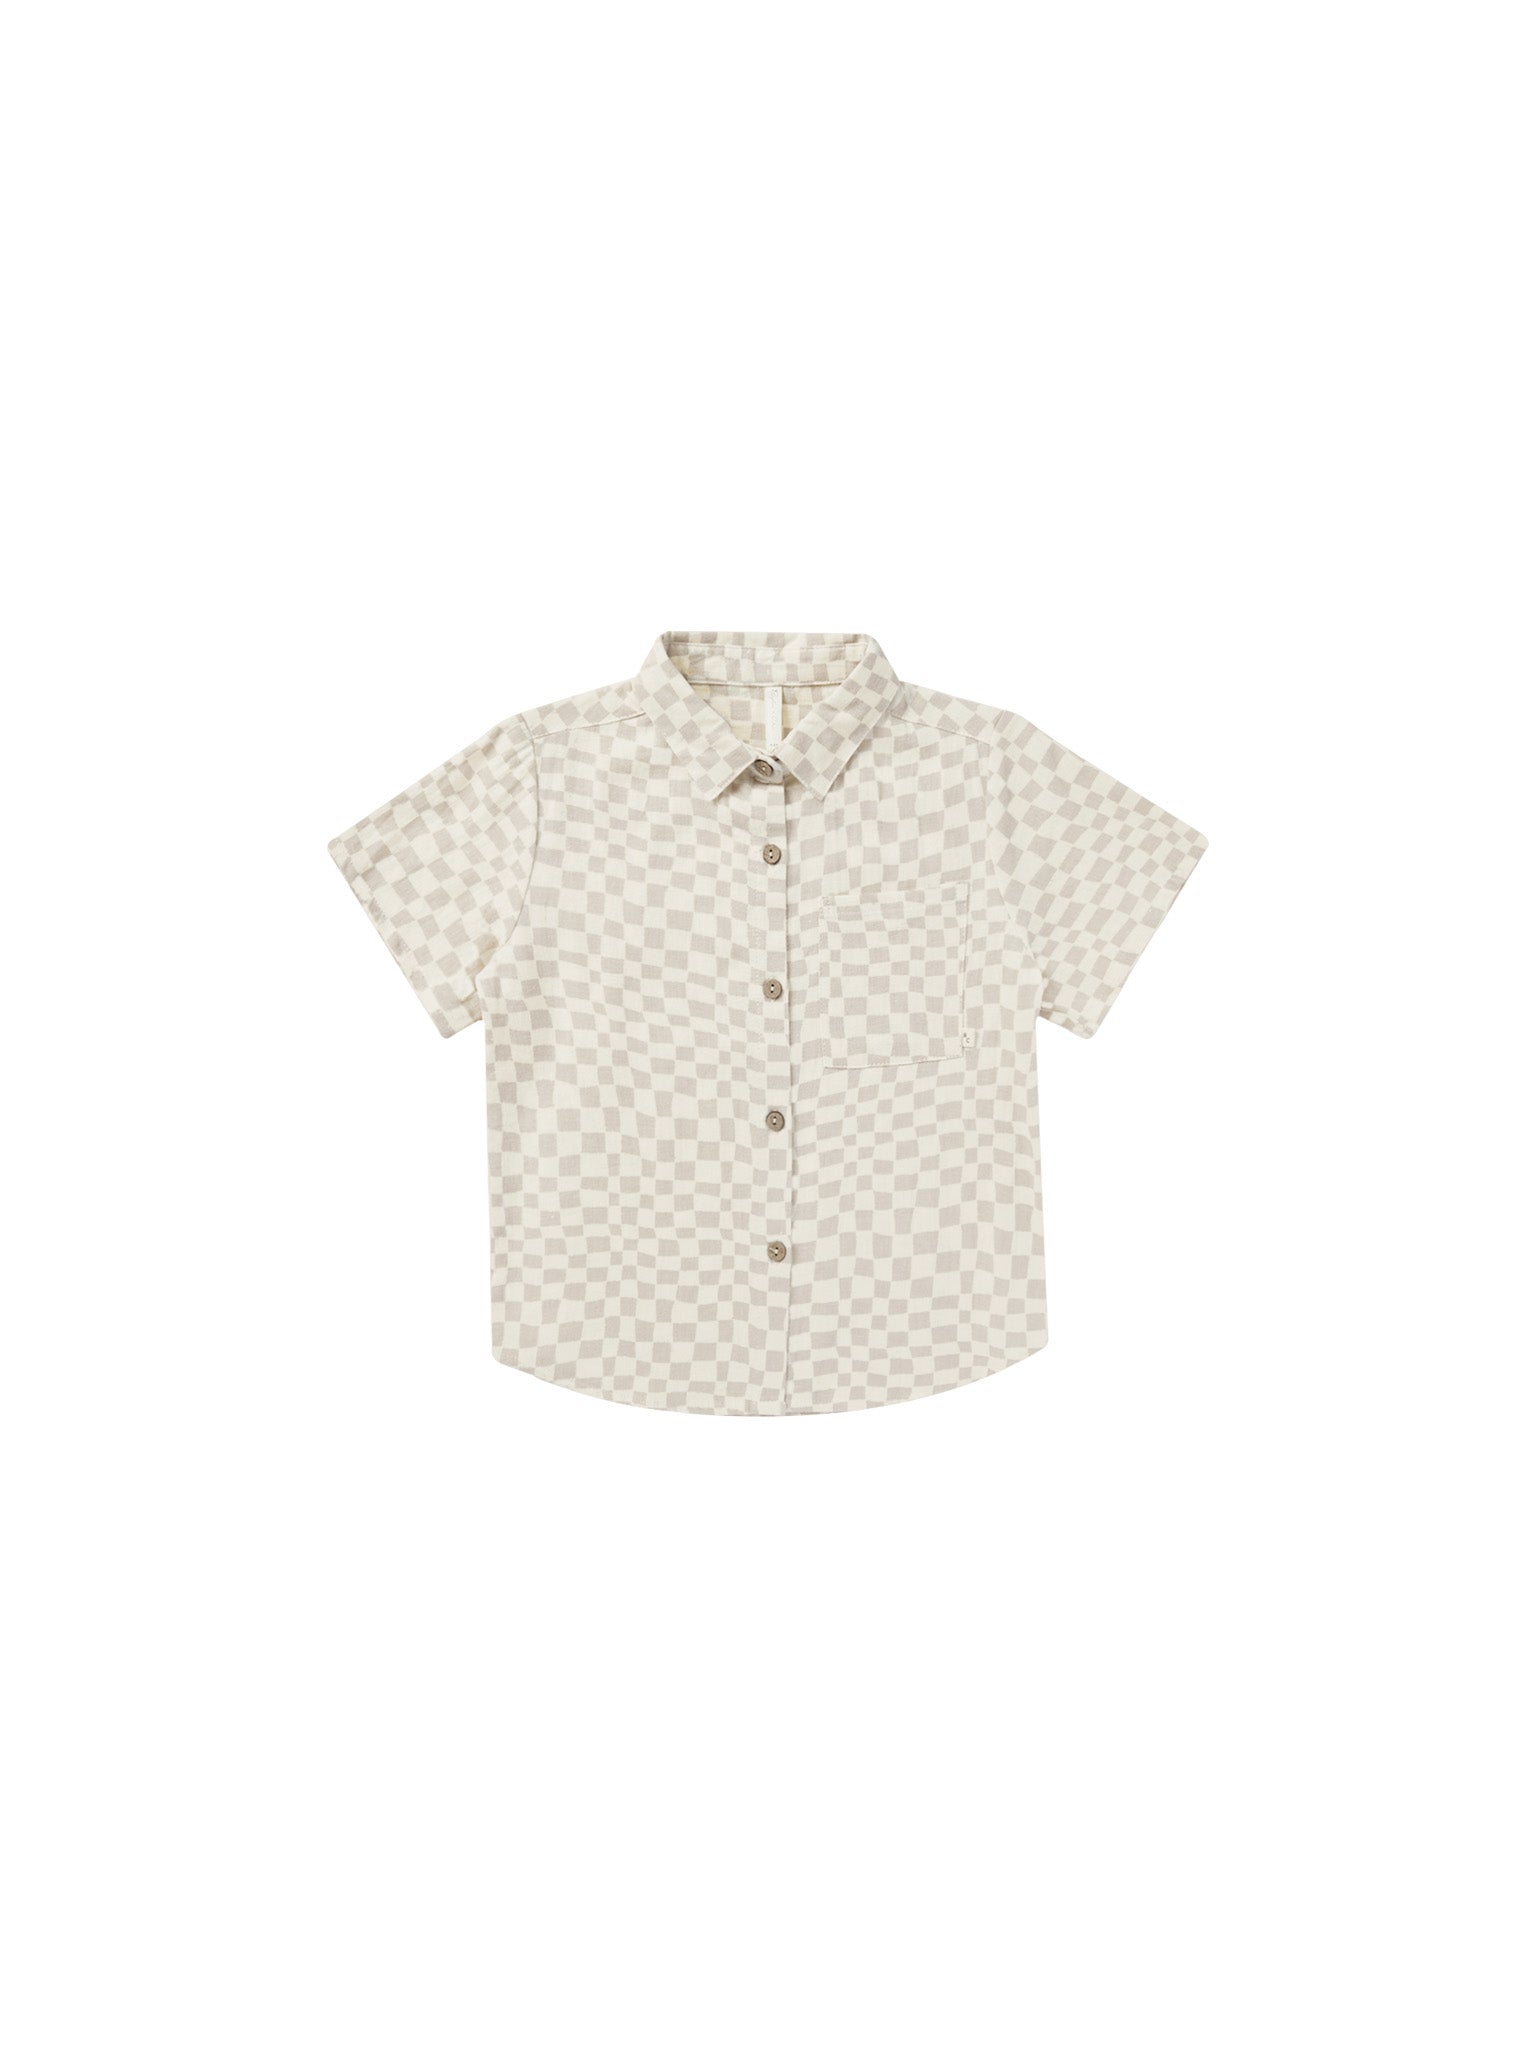 Collared Short Sleeve Shirt | Dove Check